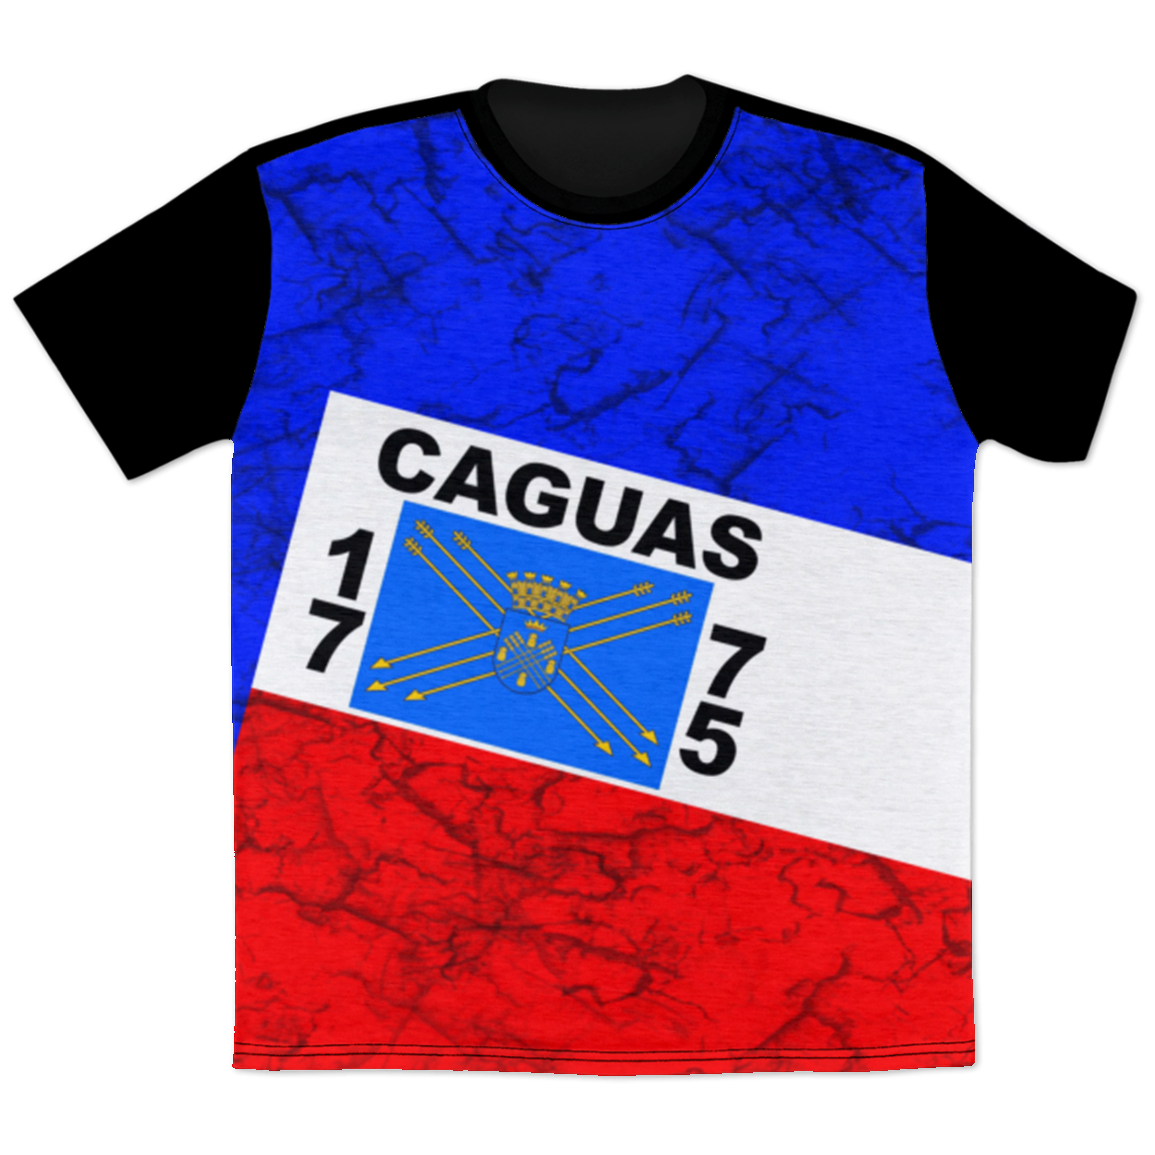 Caguas T-Shirt - Puerto Rican Pride